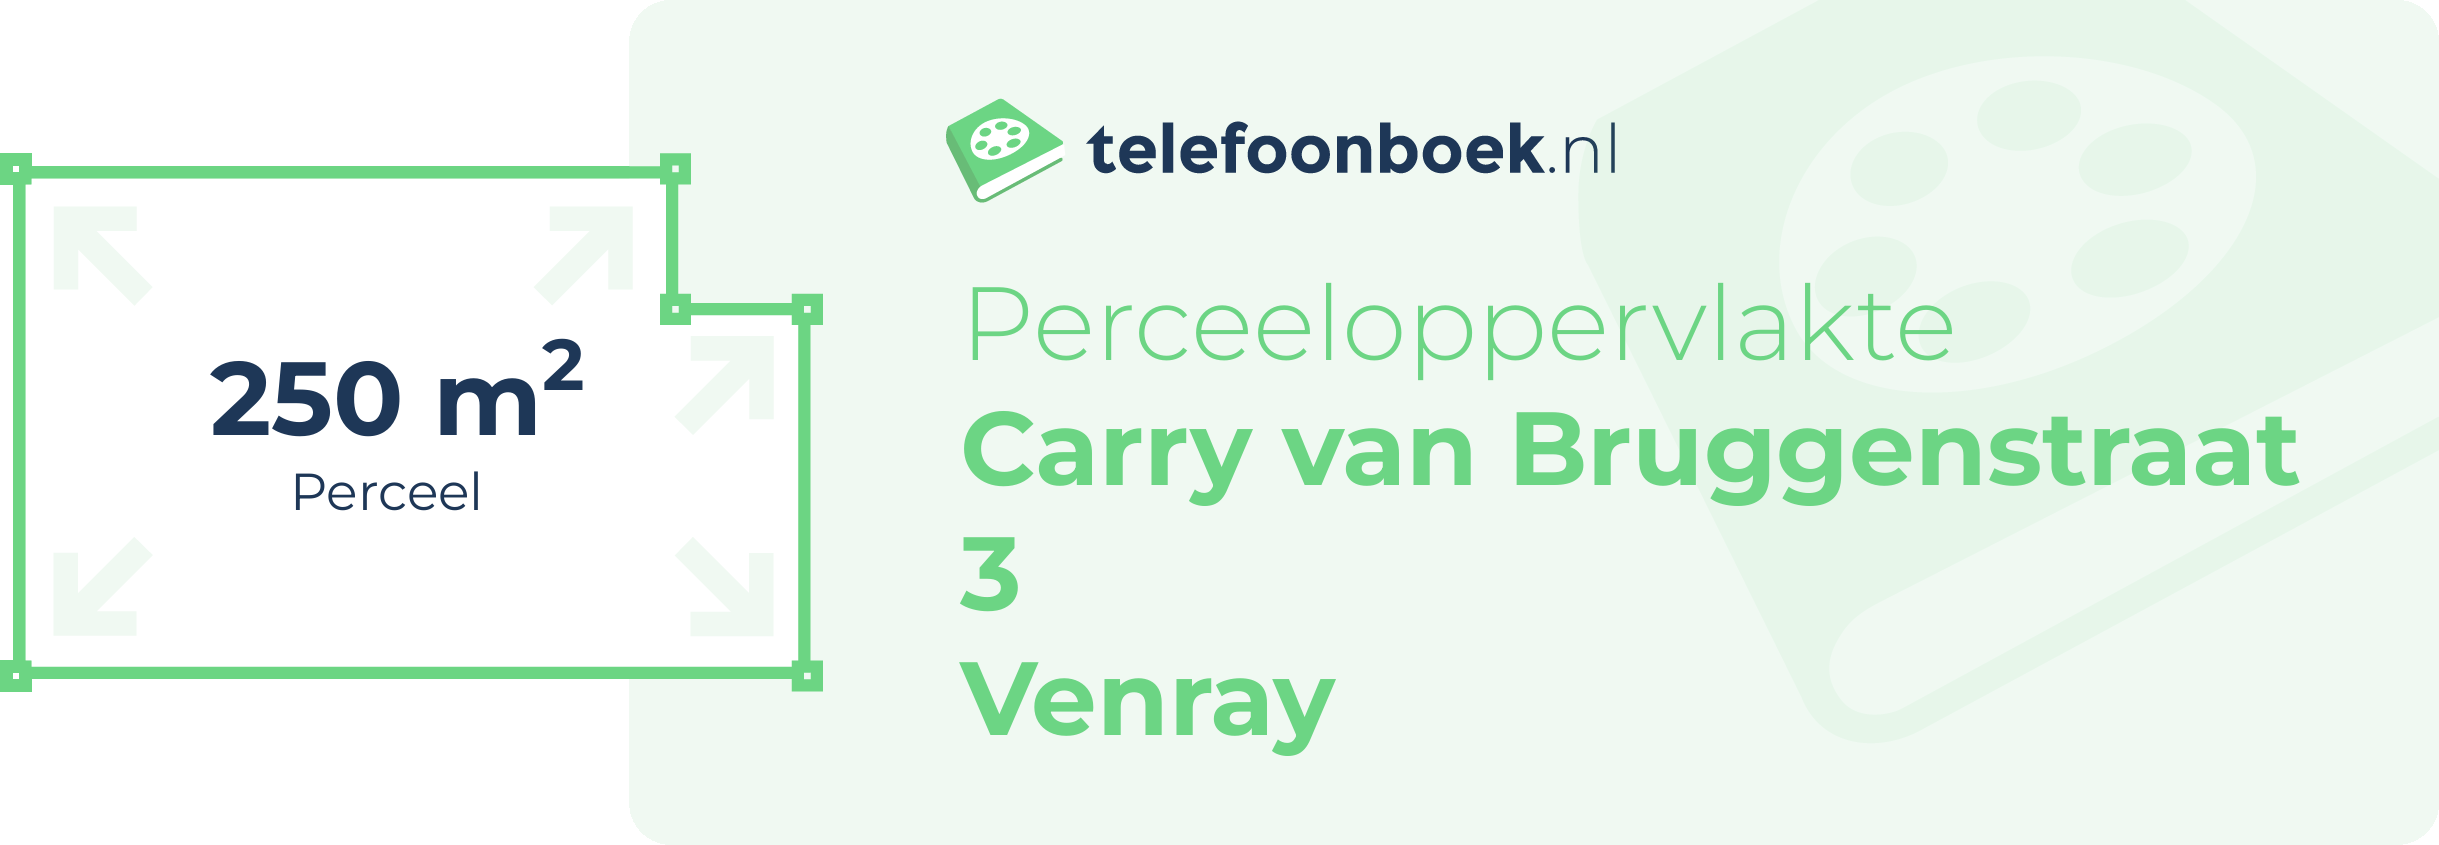 Perceeloppervlakte Carry Van Bruggenstraat 3 Venray